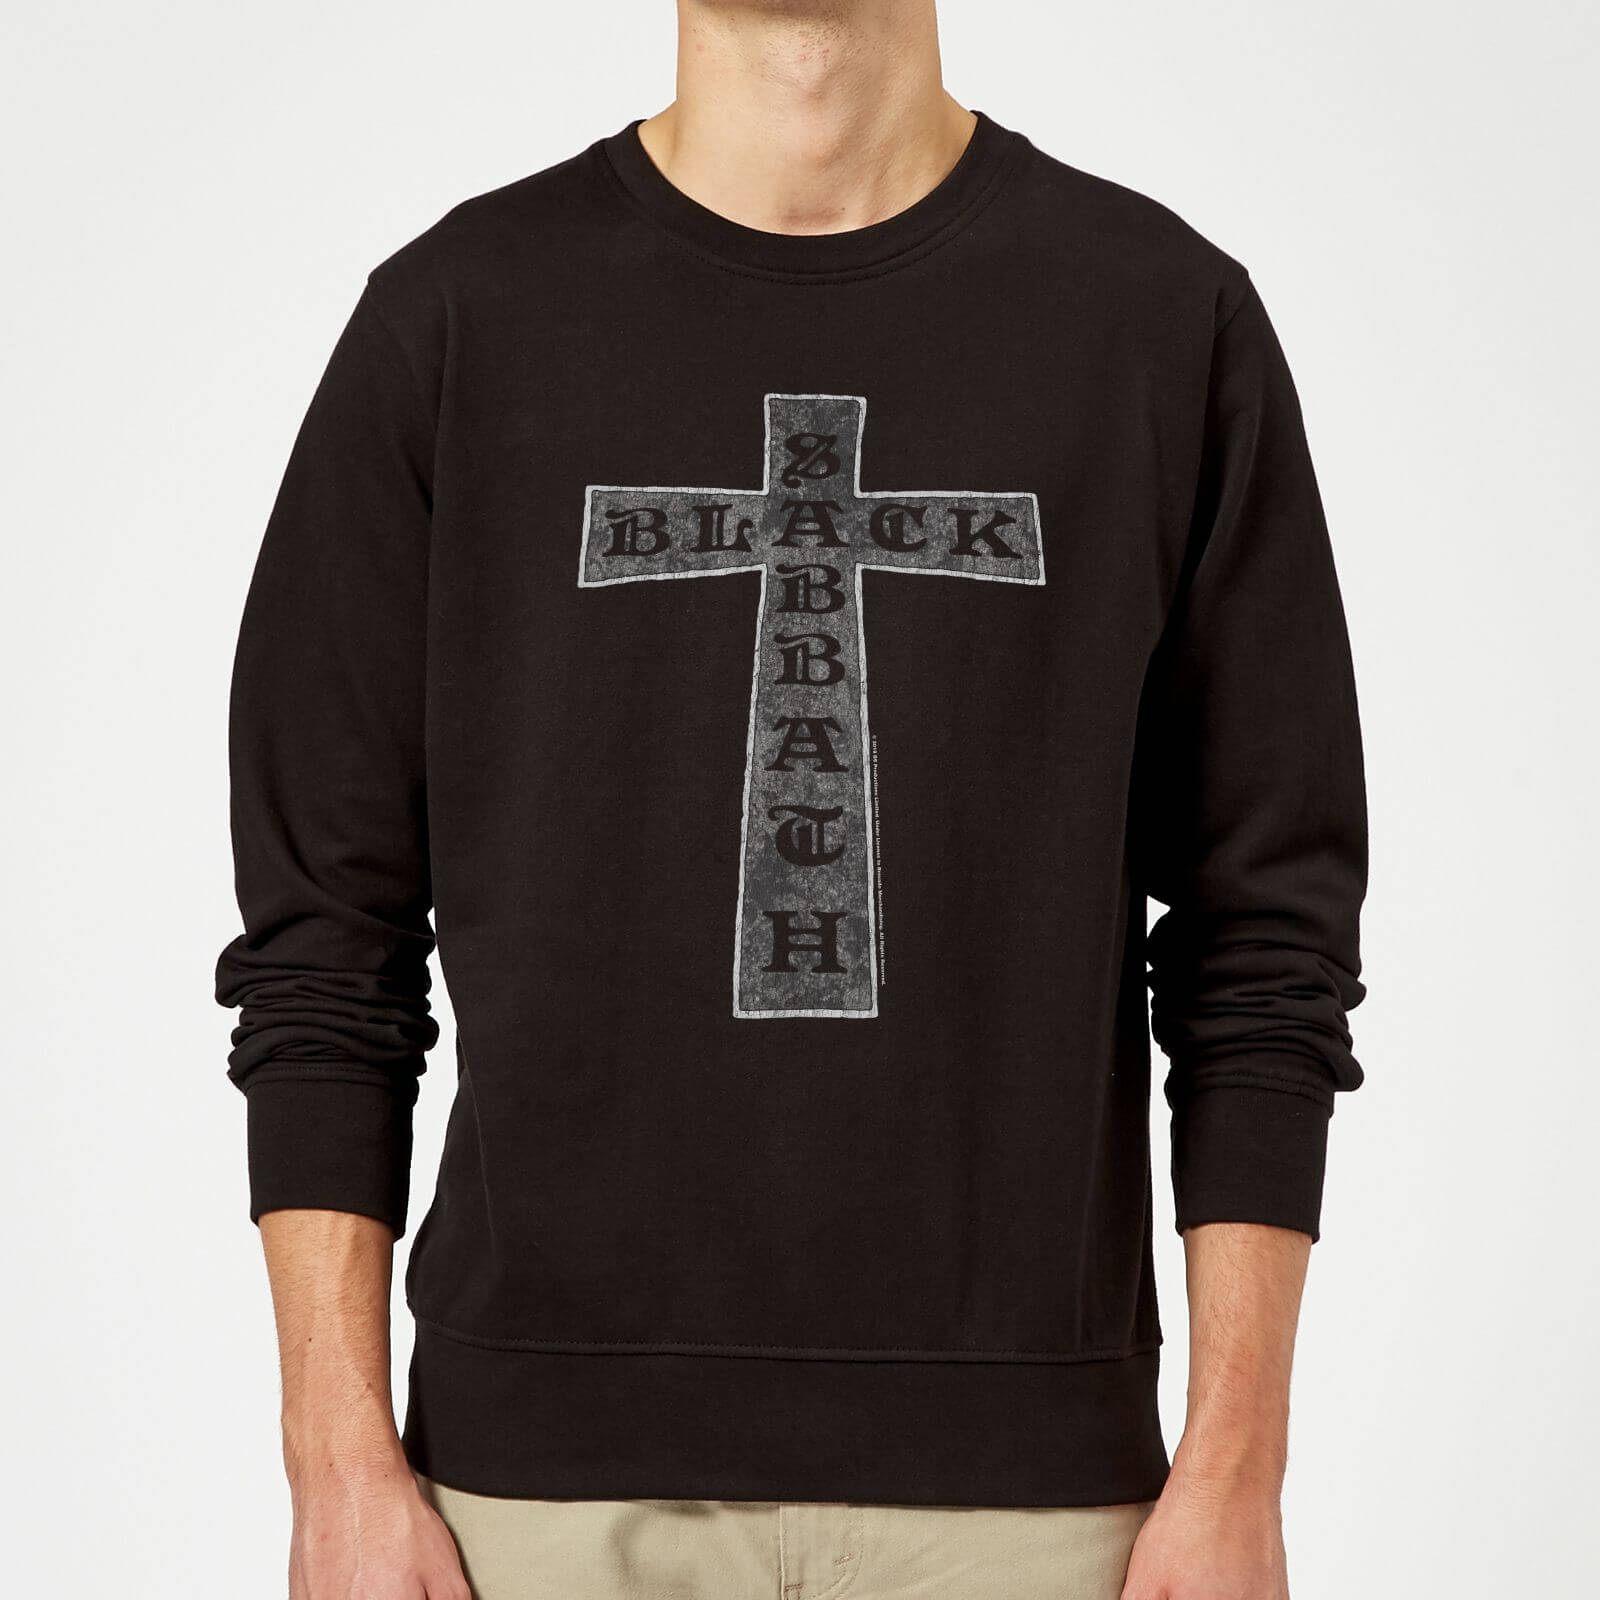 Black Sabbath Cross Sweatshirt - Black - M